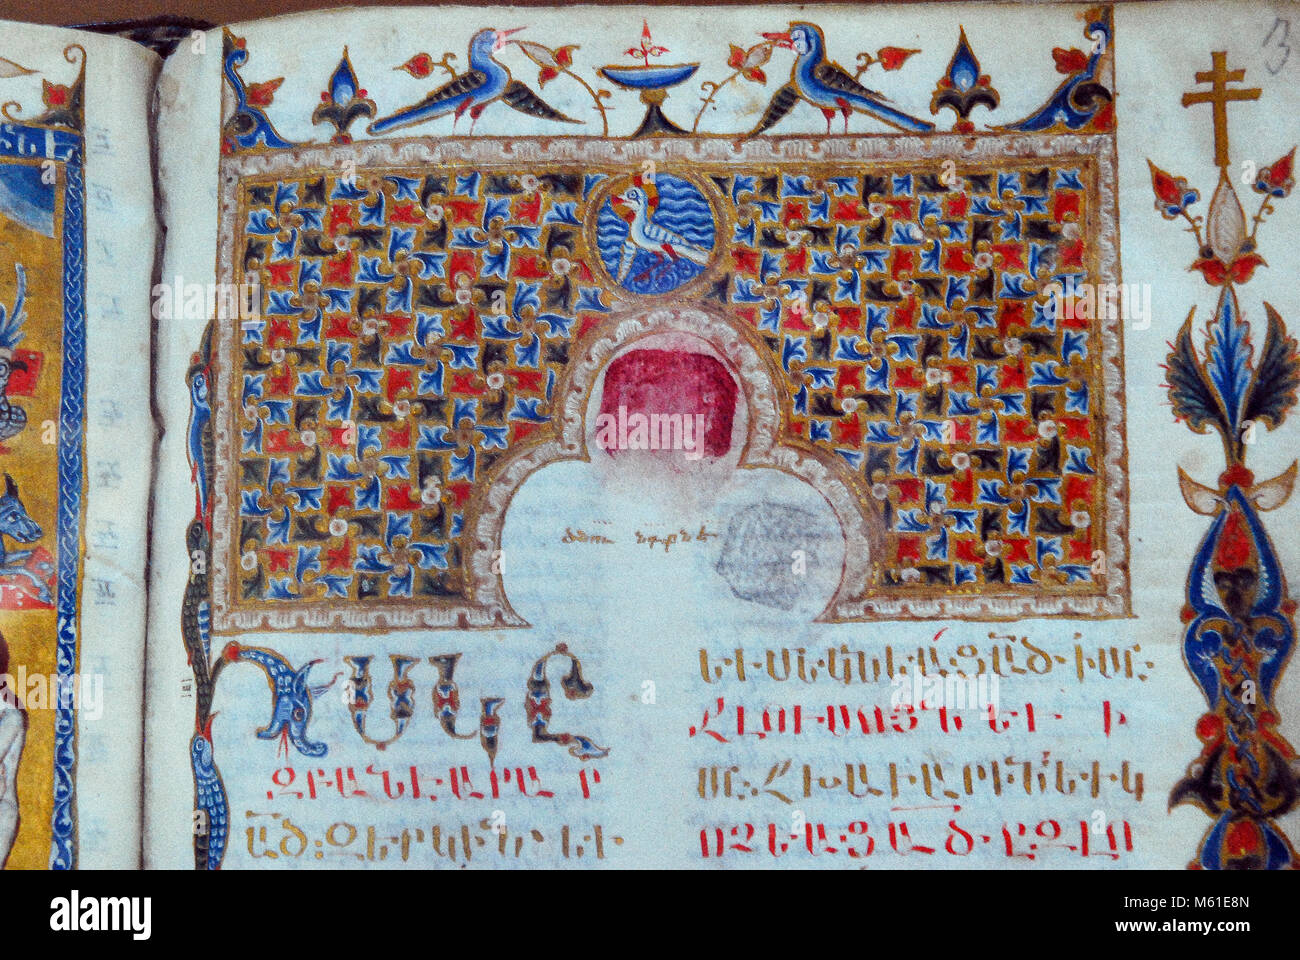 Armenia Yeveran Materadaran illuminated codices and manuscripts of the thirteenth century Stock Photo